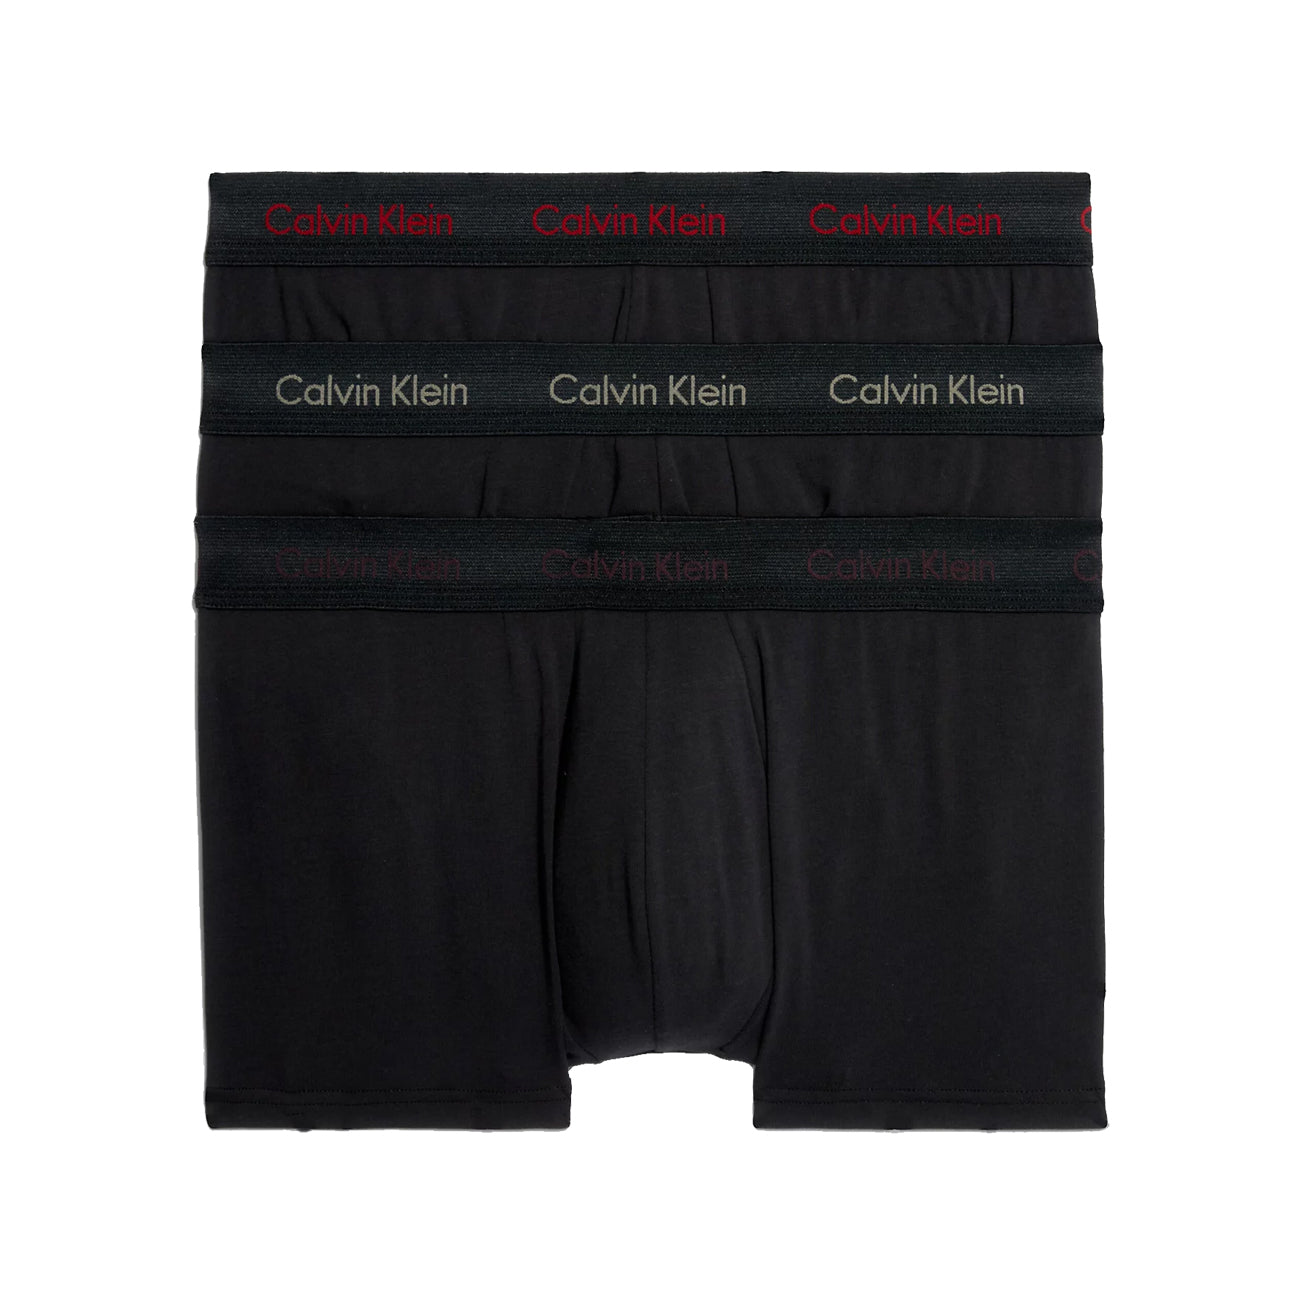 Calvin Klein 3er Pack Low Rise Trunk Cotton Stretch Boxershorts B-Pwr Plm Fusc Bry Element Htr Lg